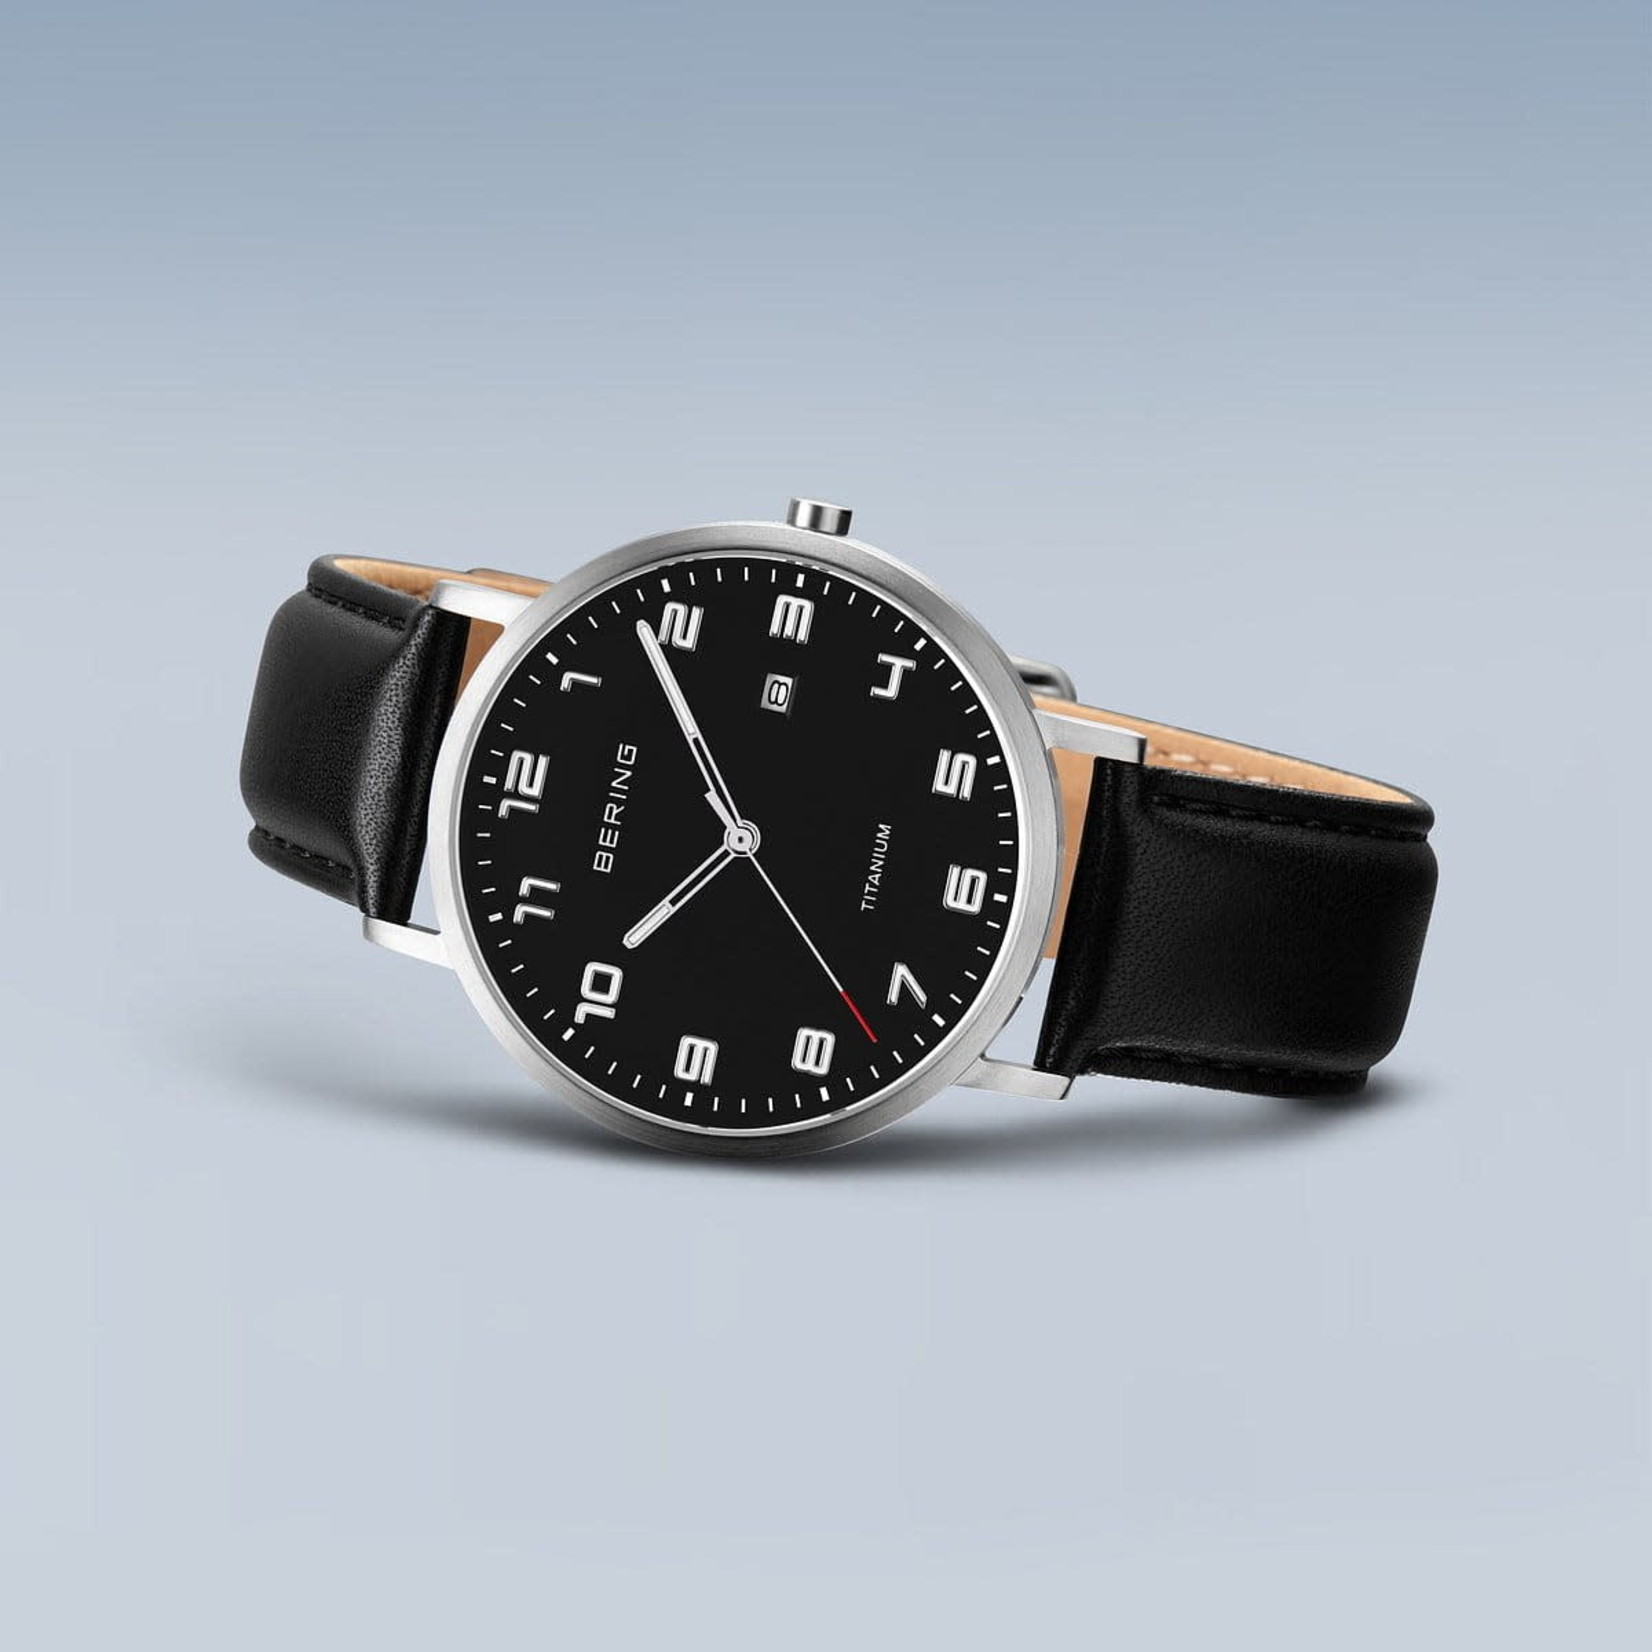 BERING Bering Titanium Watch w/Leather Strap, Black Dial & Date